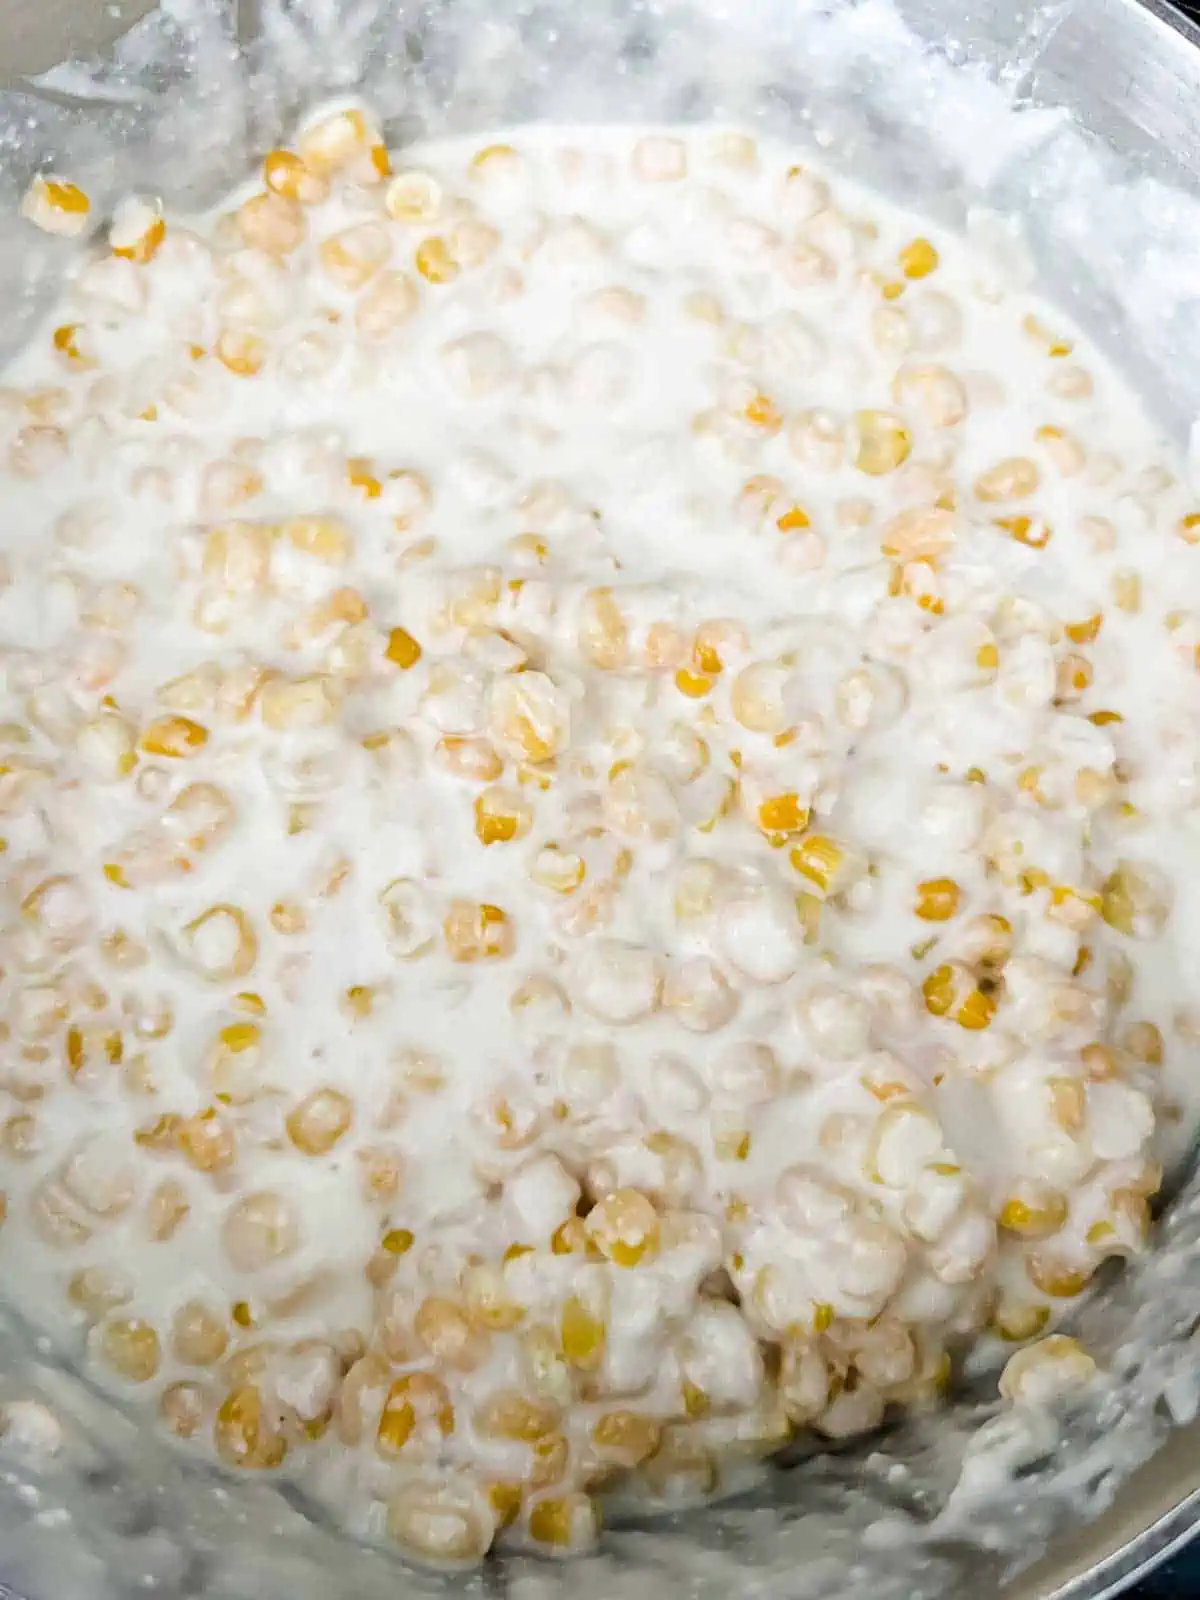 Photo of corn added to a cheesy cream sauce.